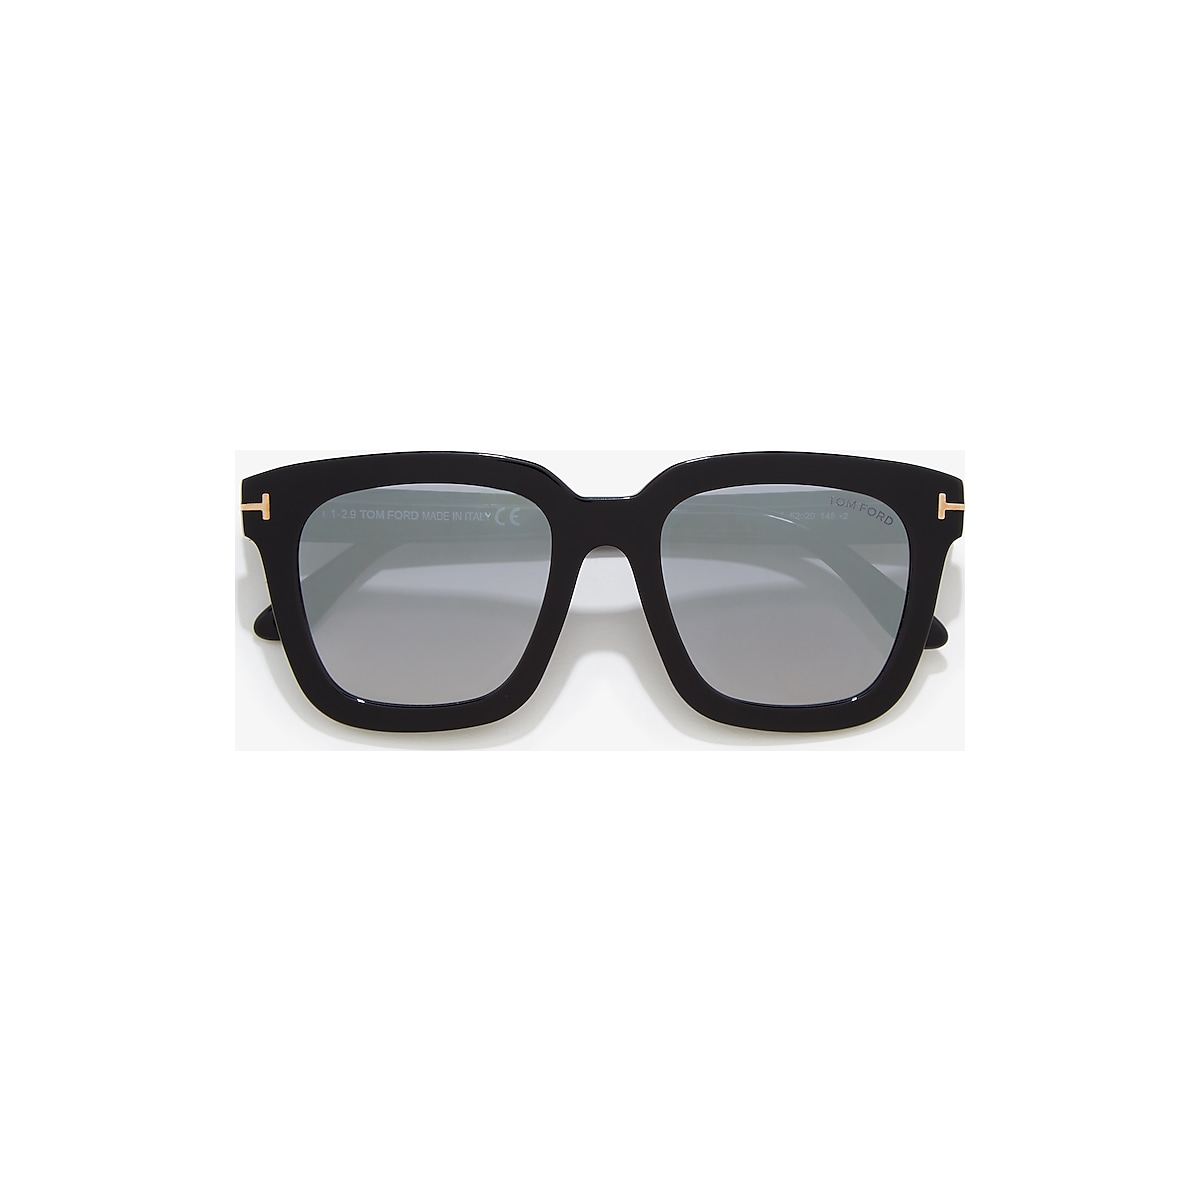 Tom Ford FT0690 52 Grey Mirror & Shiny Black Sunglasses | Sunglass Hut USA